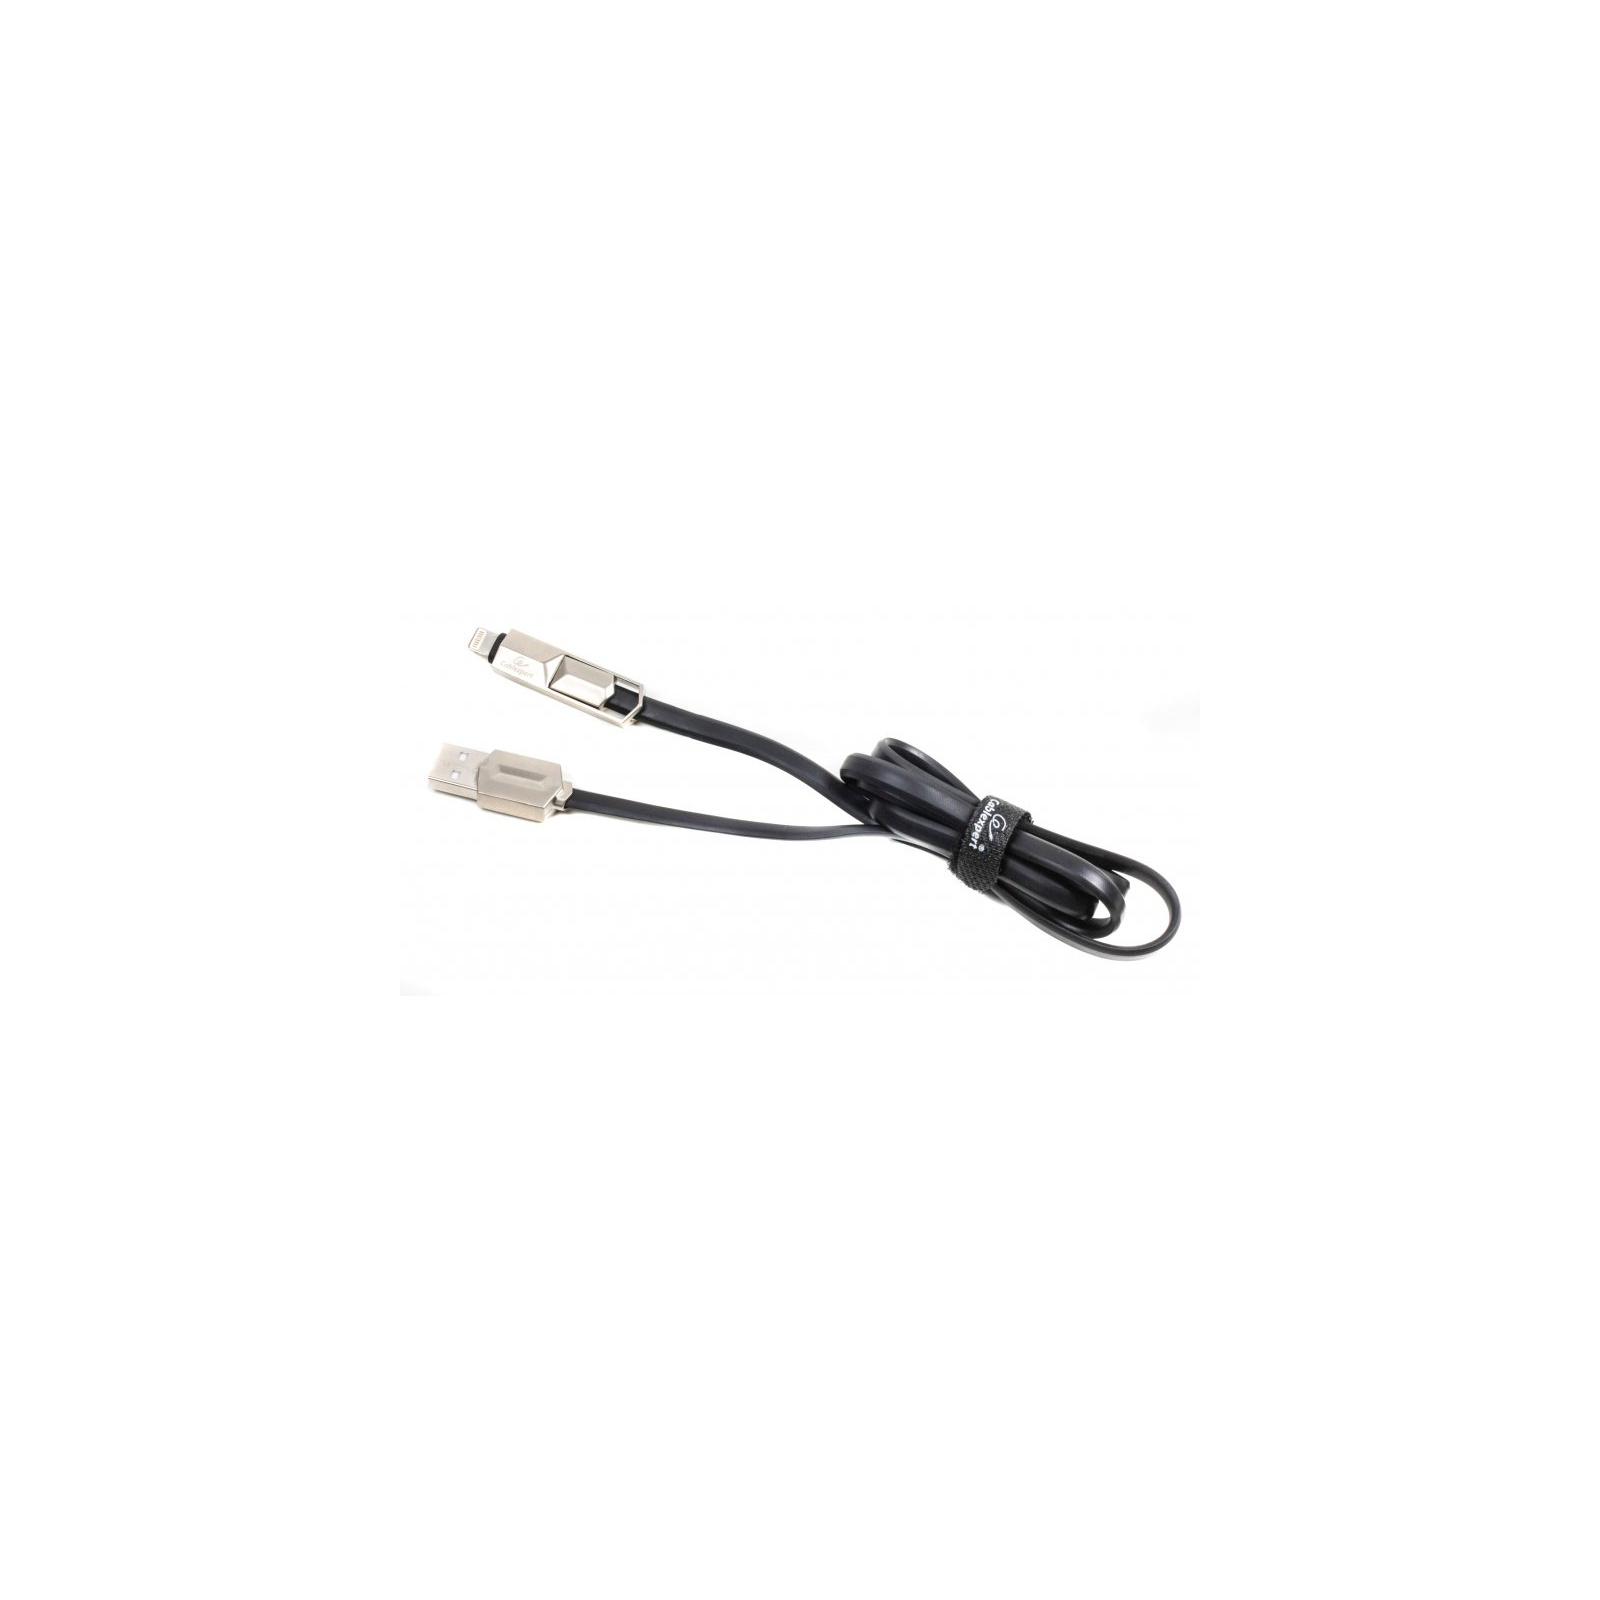 Дата кабель USB 2.0 AM to Micro 5P 1.0m Cablexpert (CCPB-ML-USB-05BK) изображение 2